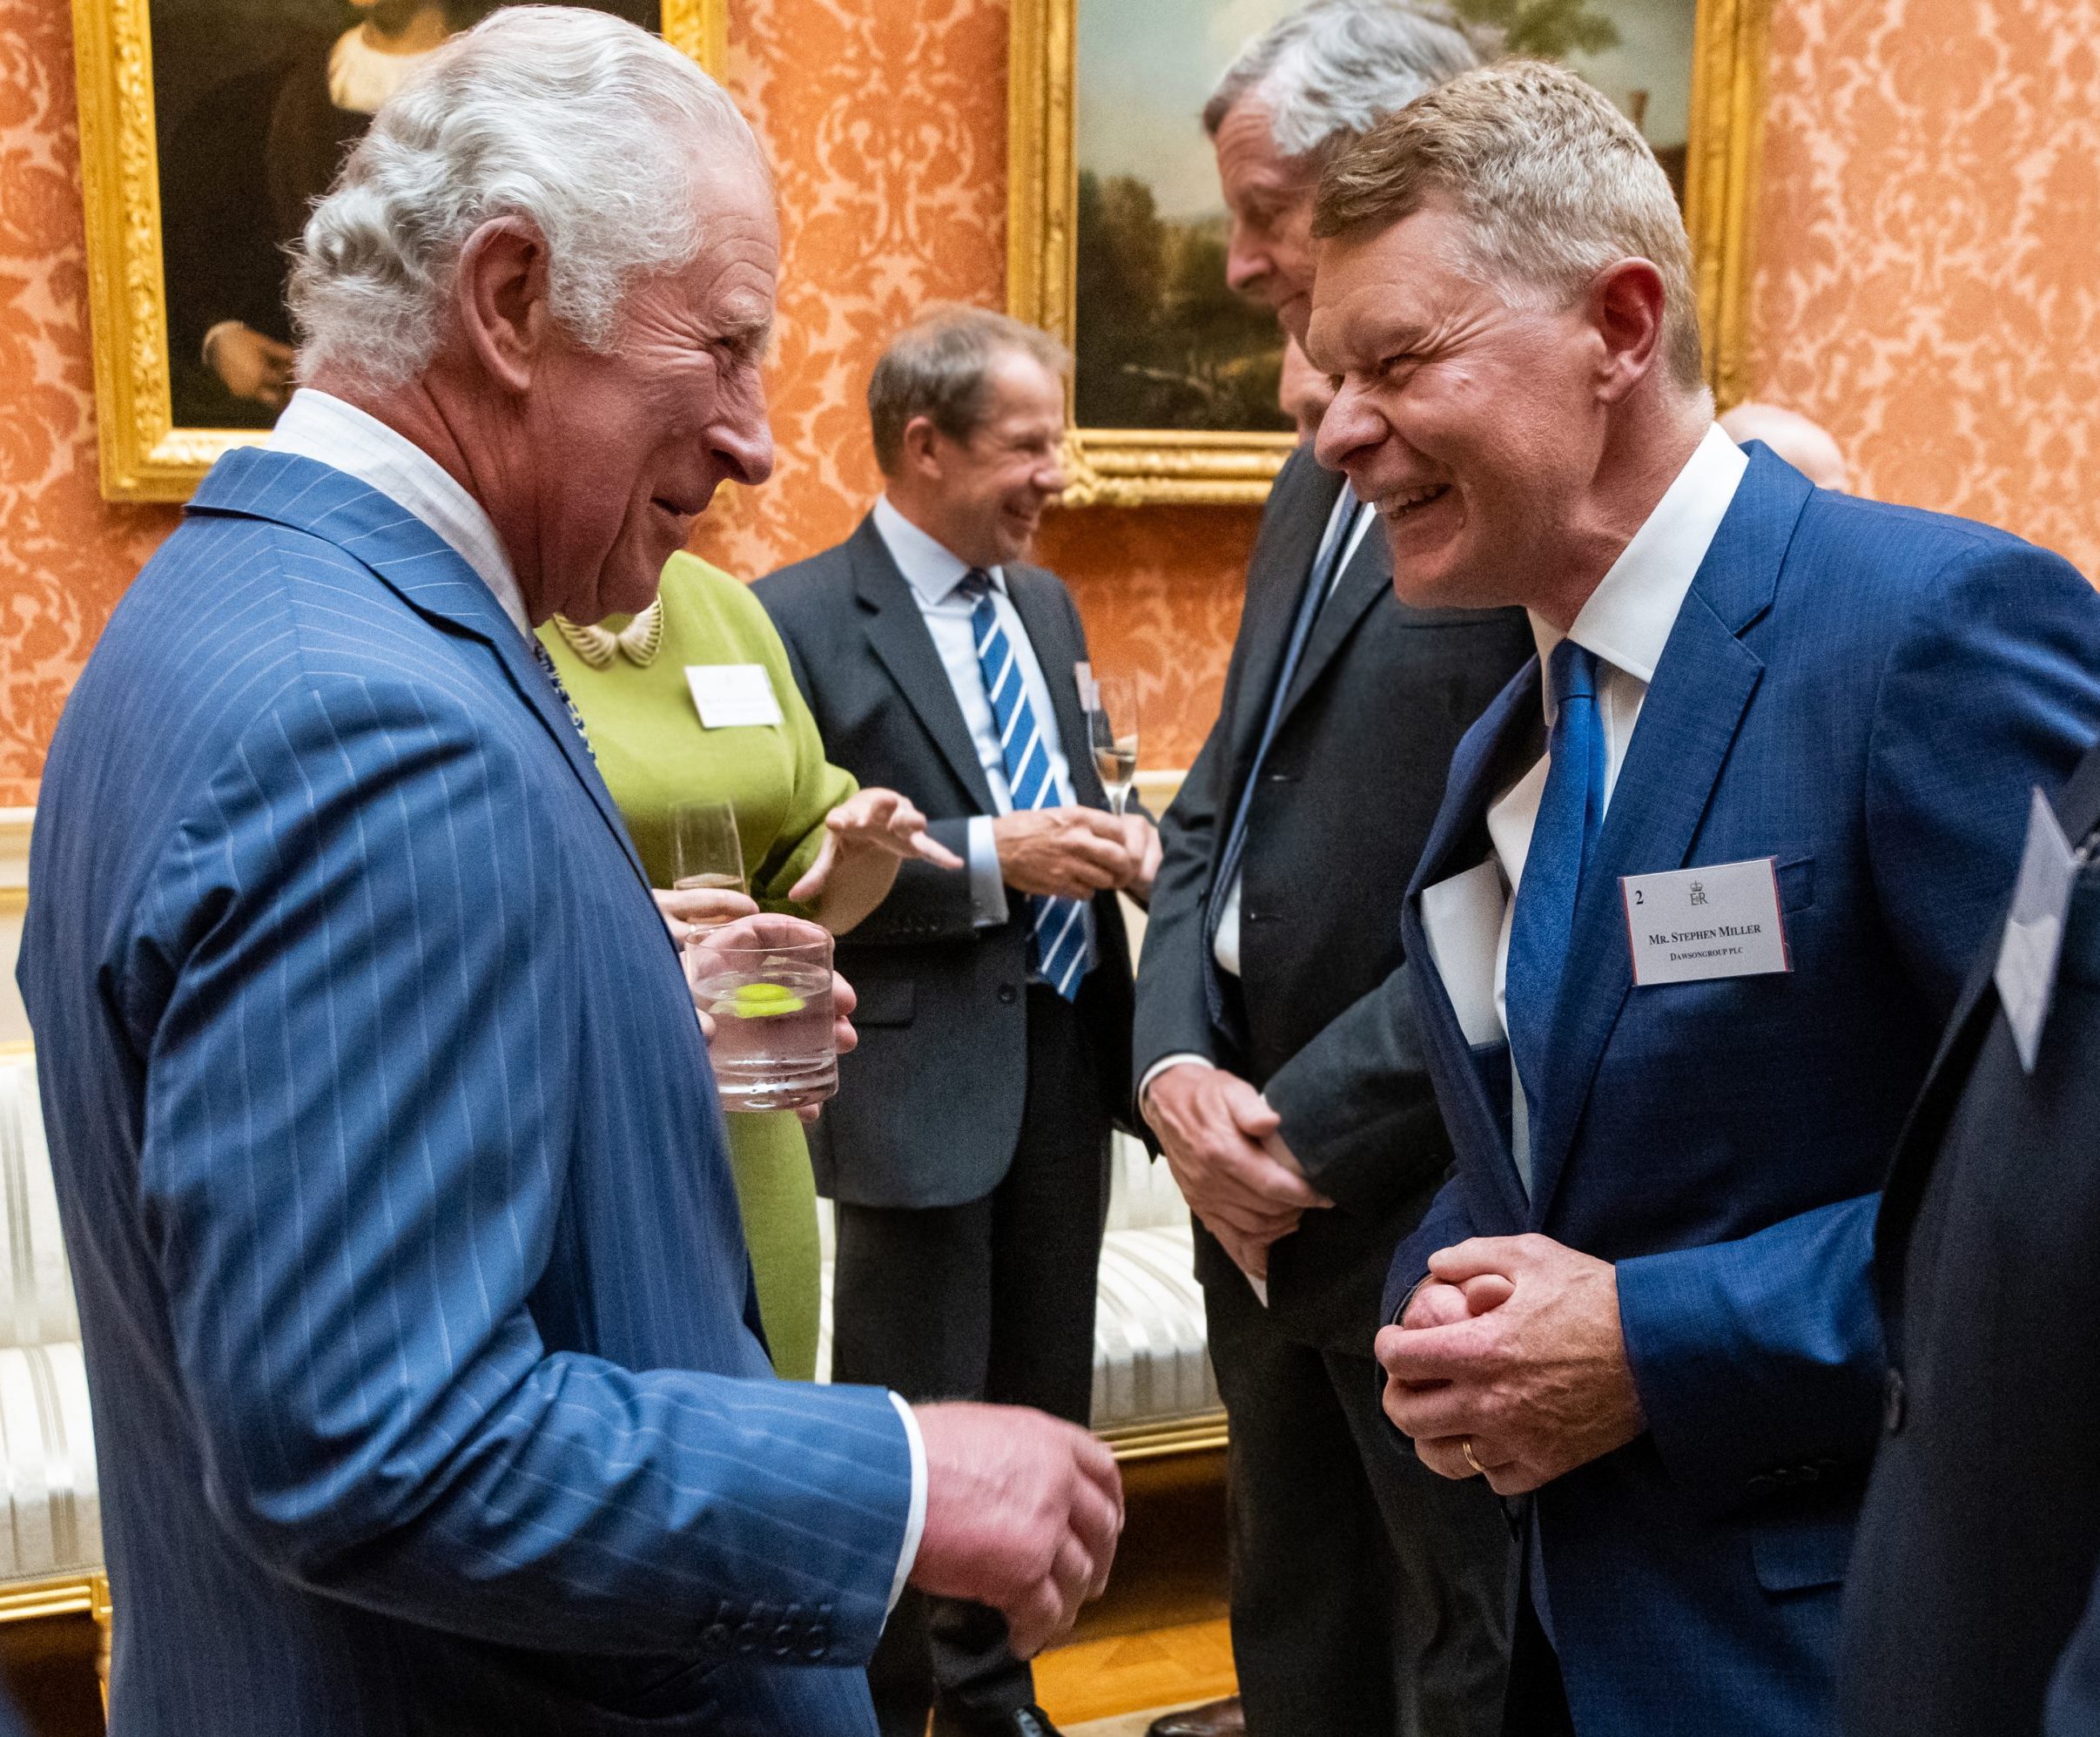 Prince Charles & Steve Miller at the Royal reception